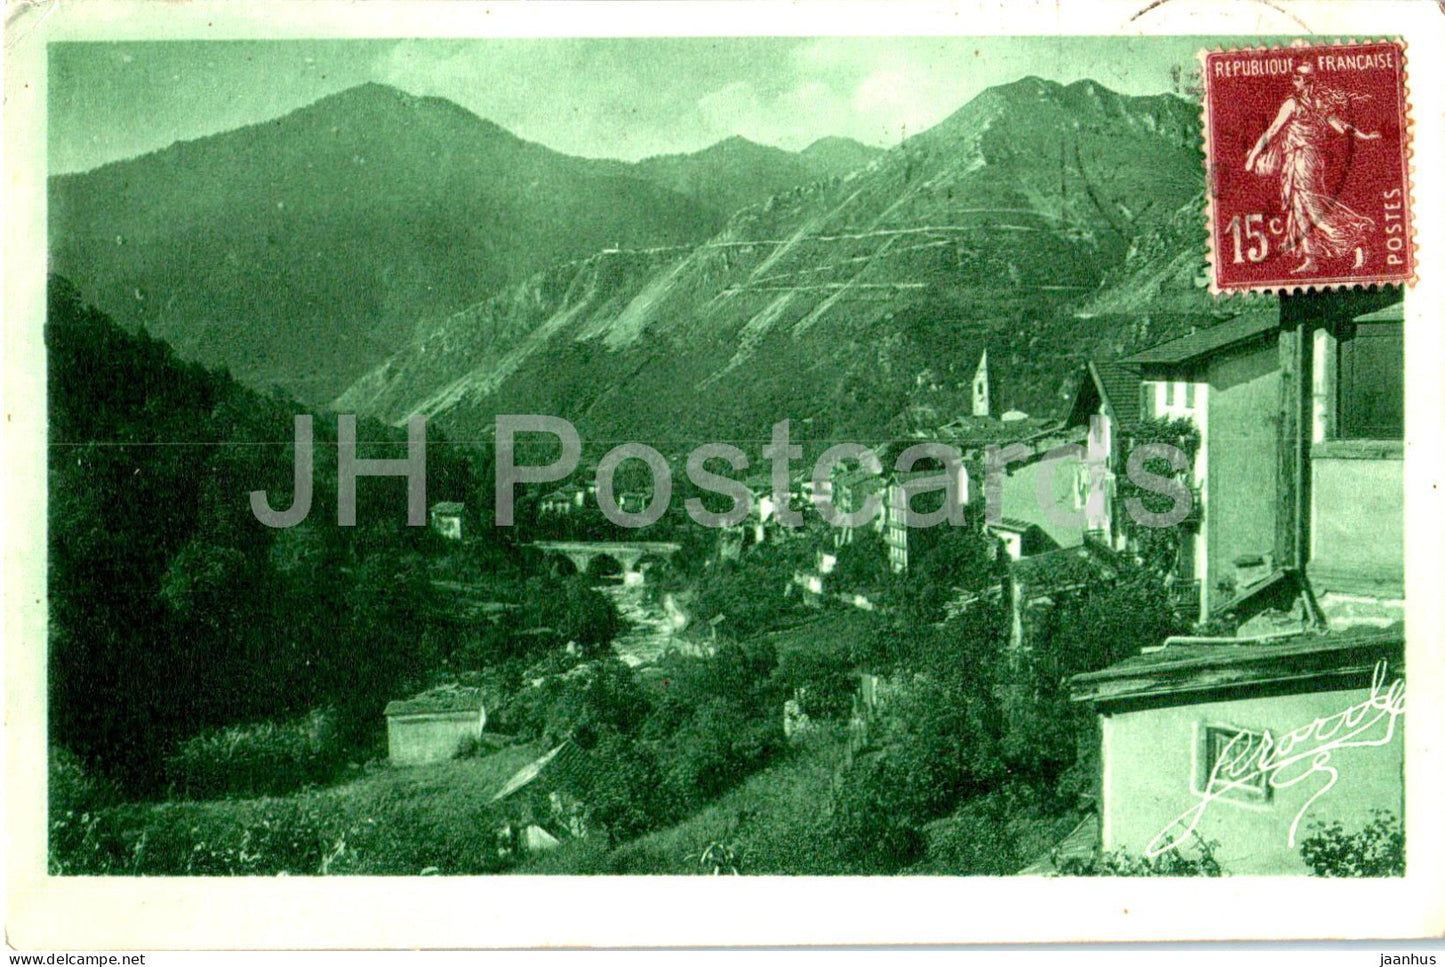 Saint Martin Vesubie - Vue Generale et Venanson - 0255 - old postcard - France - used - JH Postcards